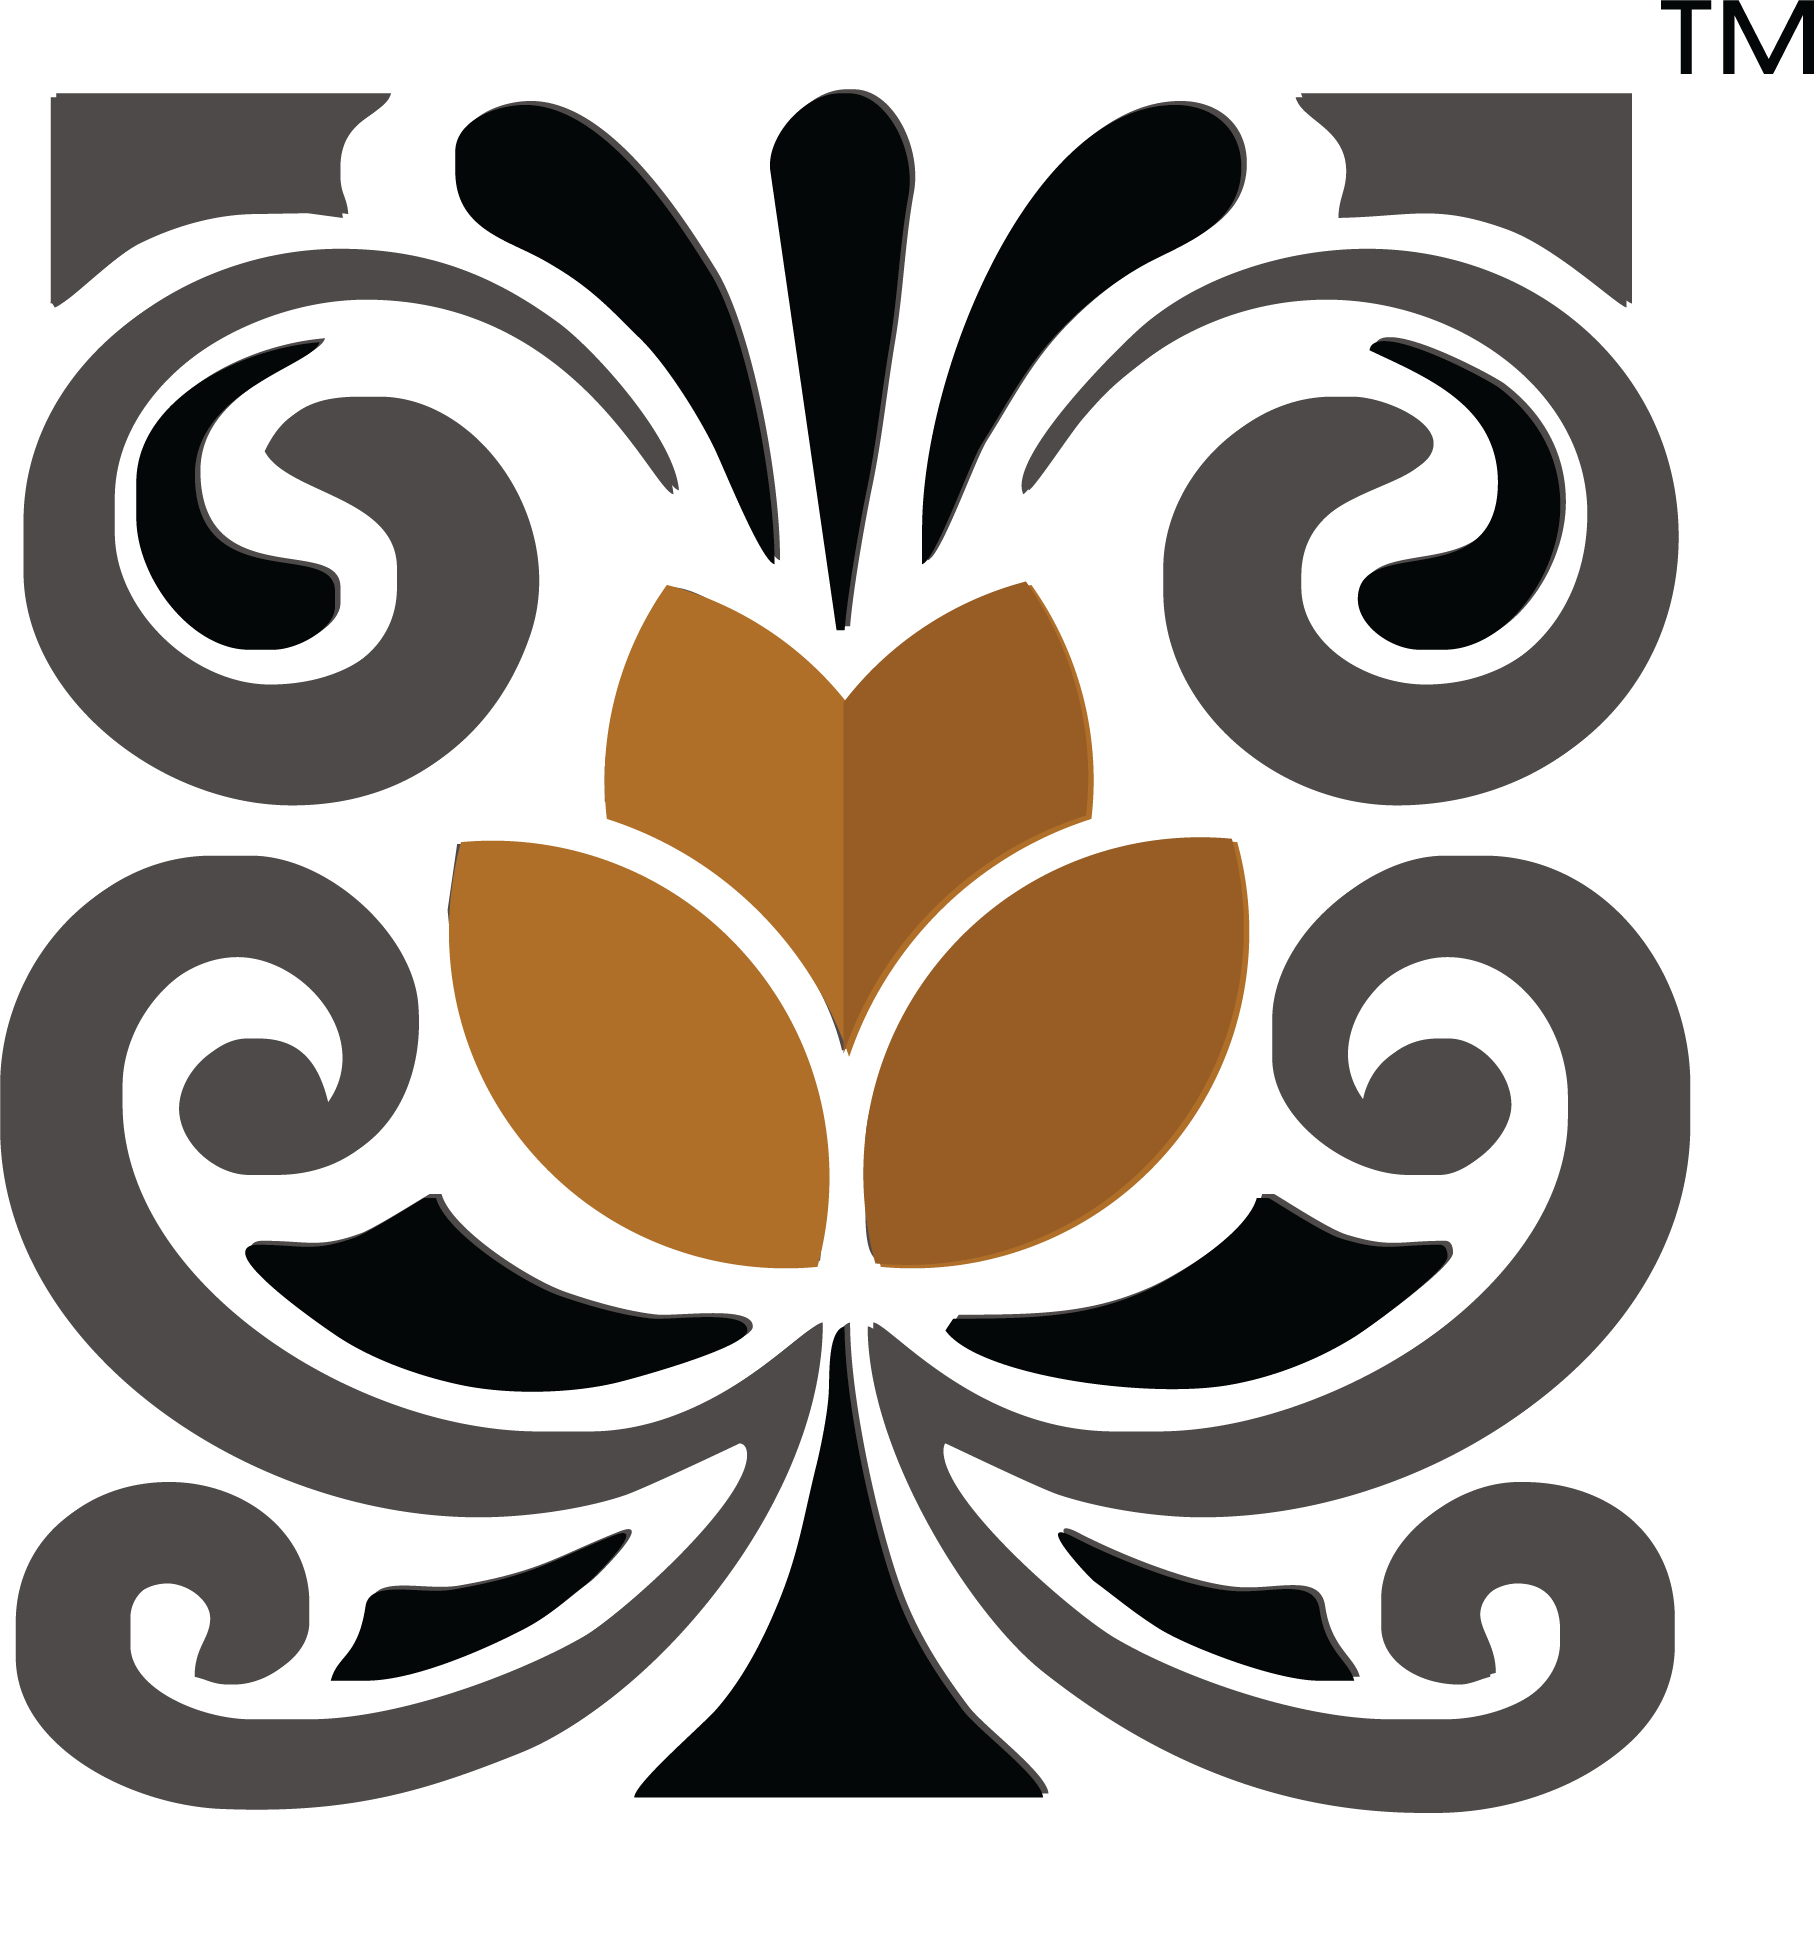 Knaak Design Group logo